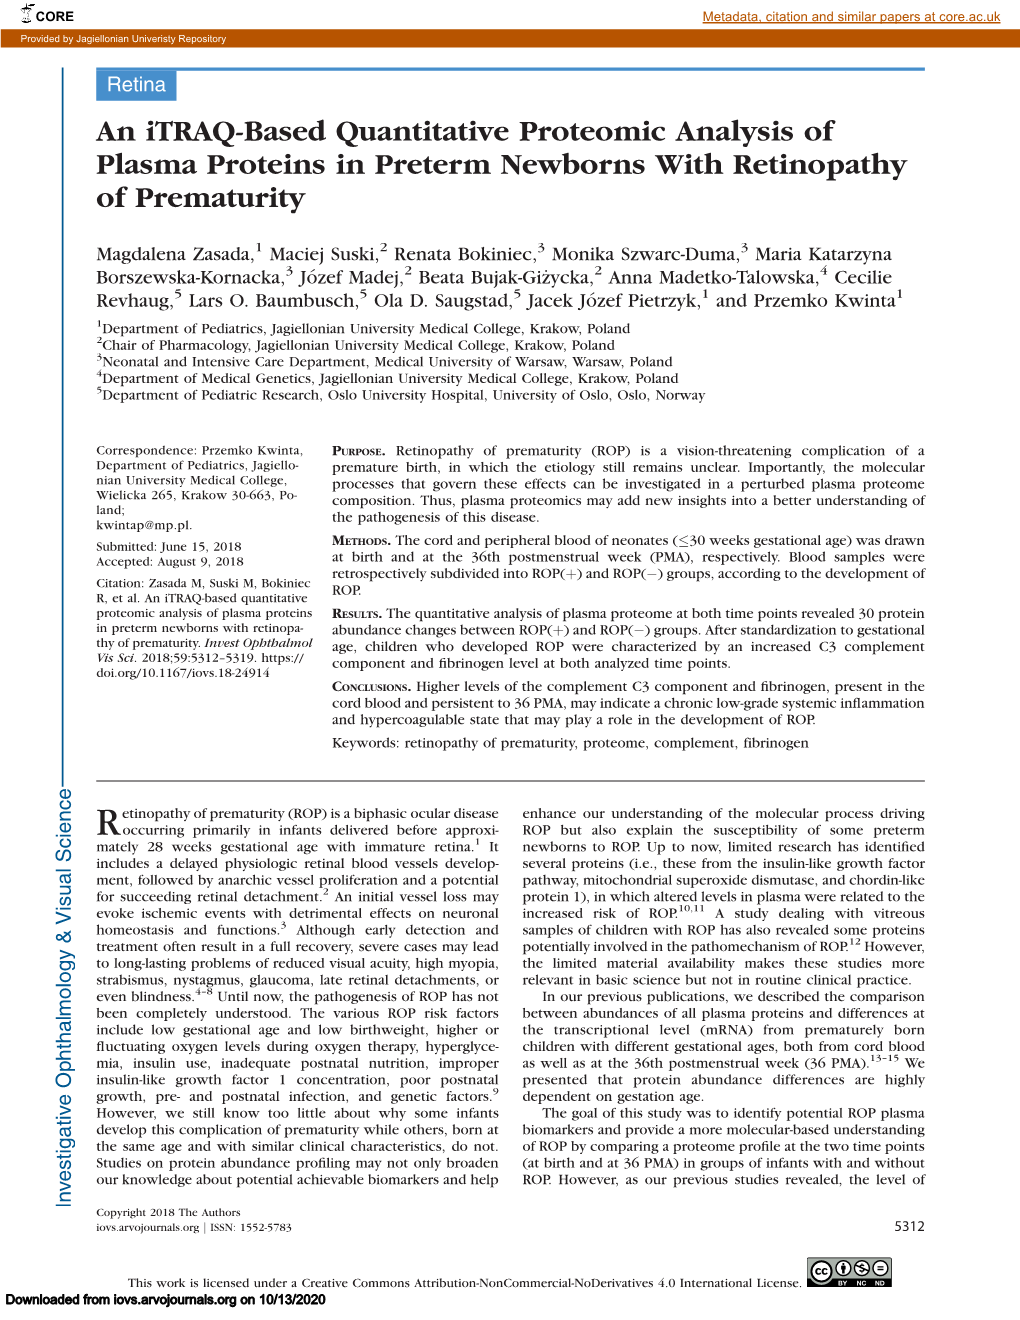 An Itraq-Based Quantitative Proteomic Analysis of Plasma Proteins in Preterm Newborns with Retinopathy of Prematurity